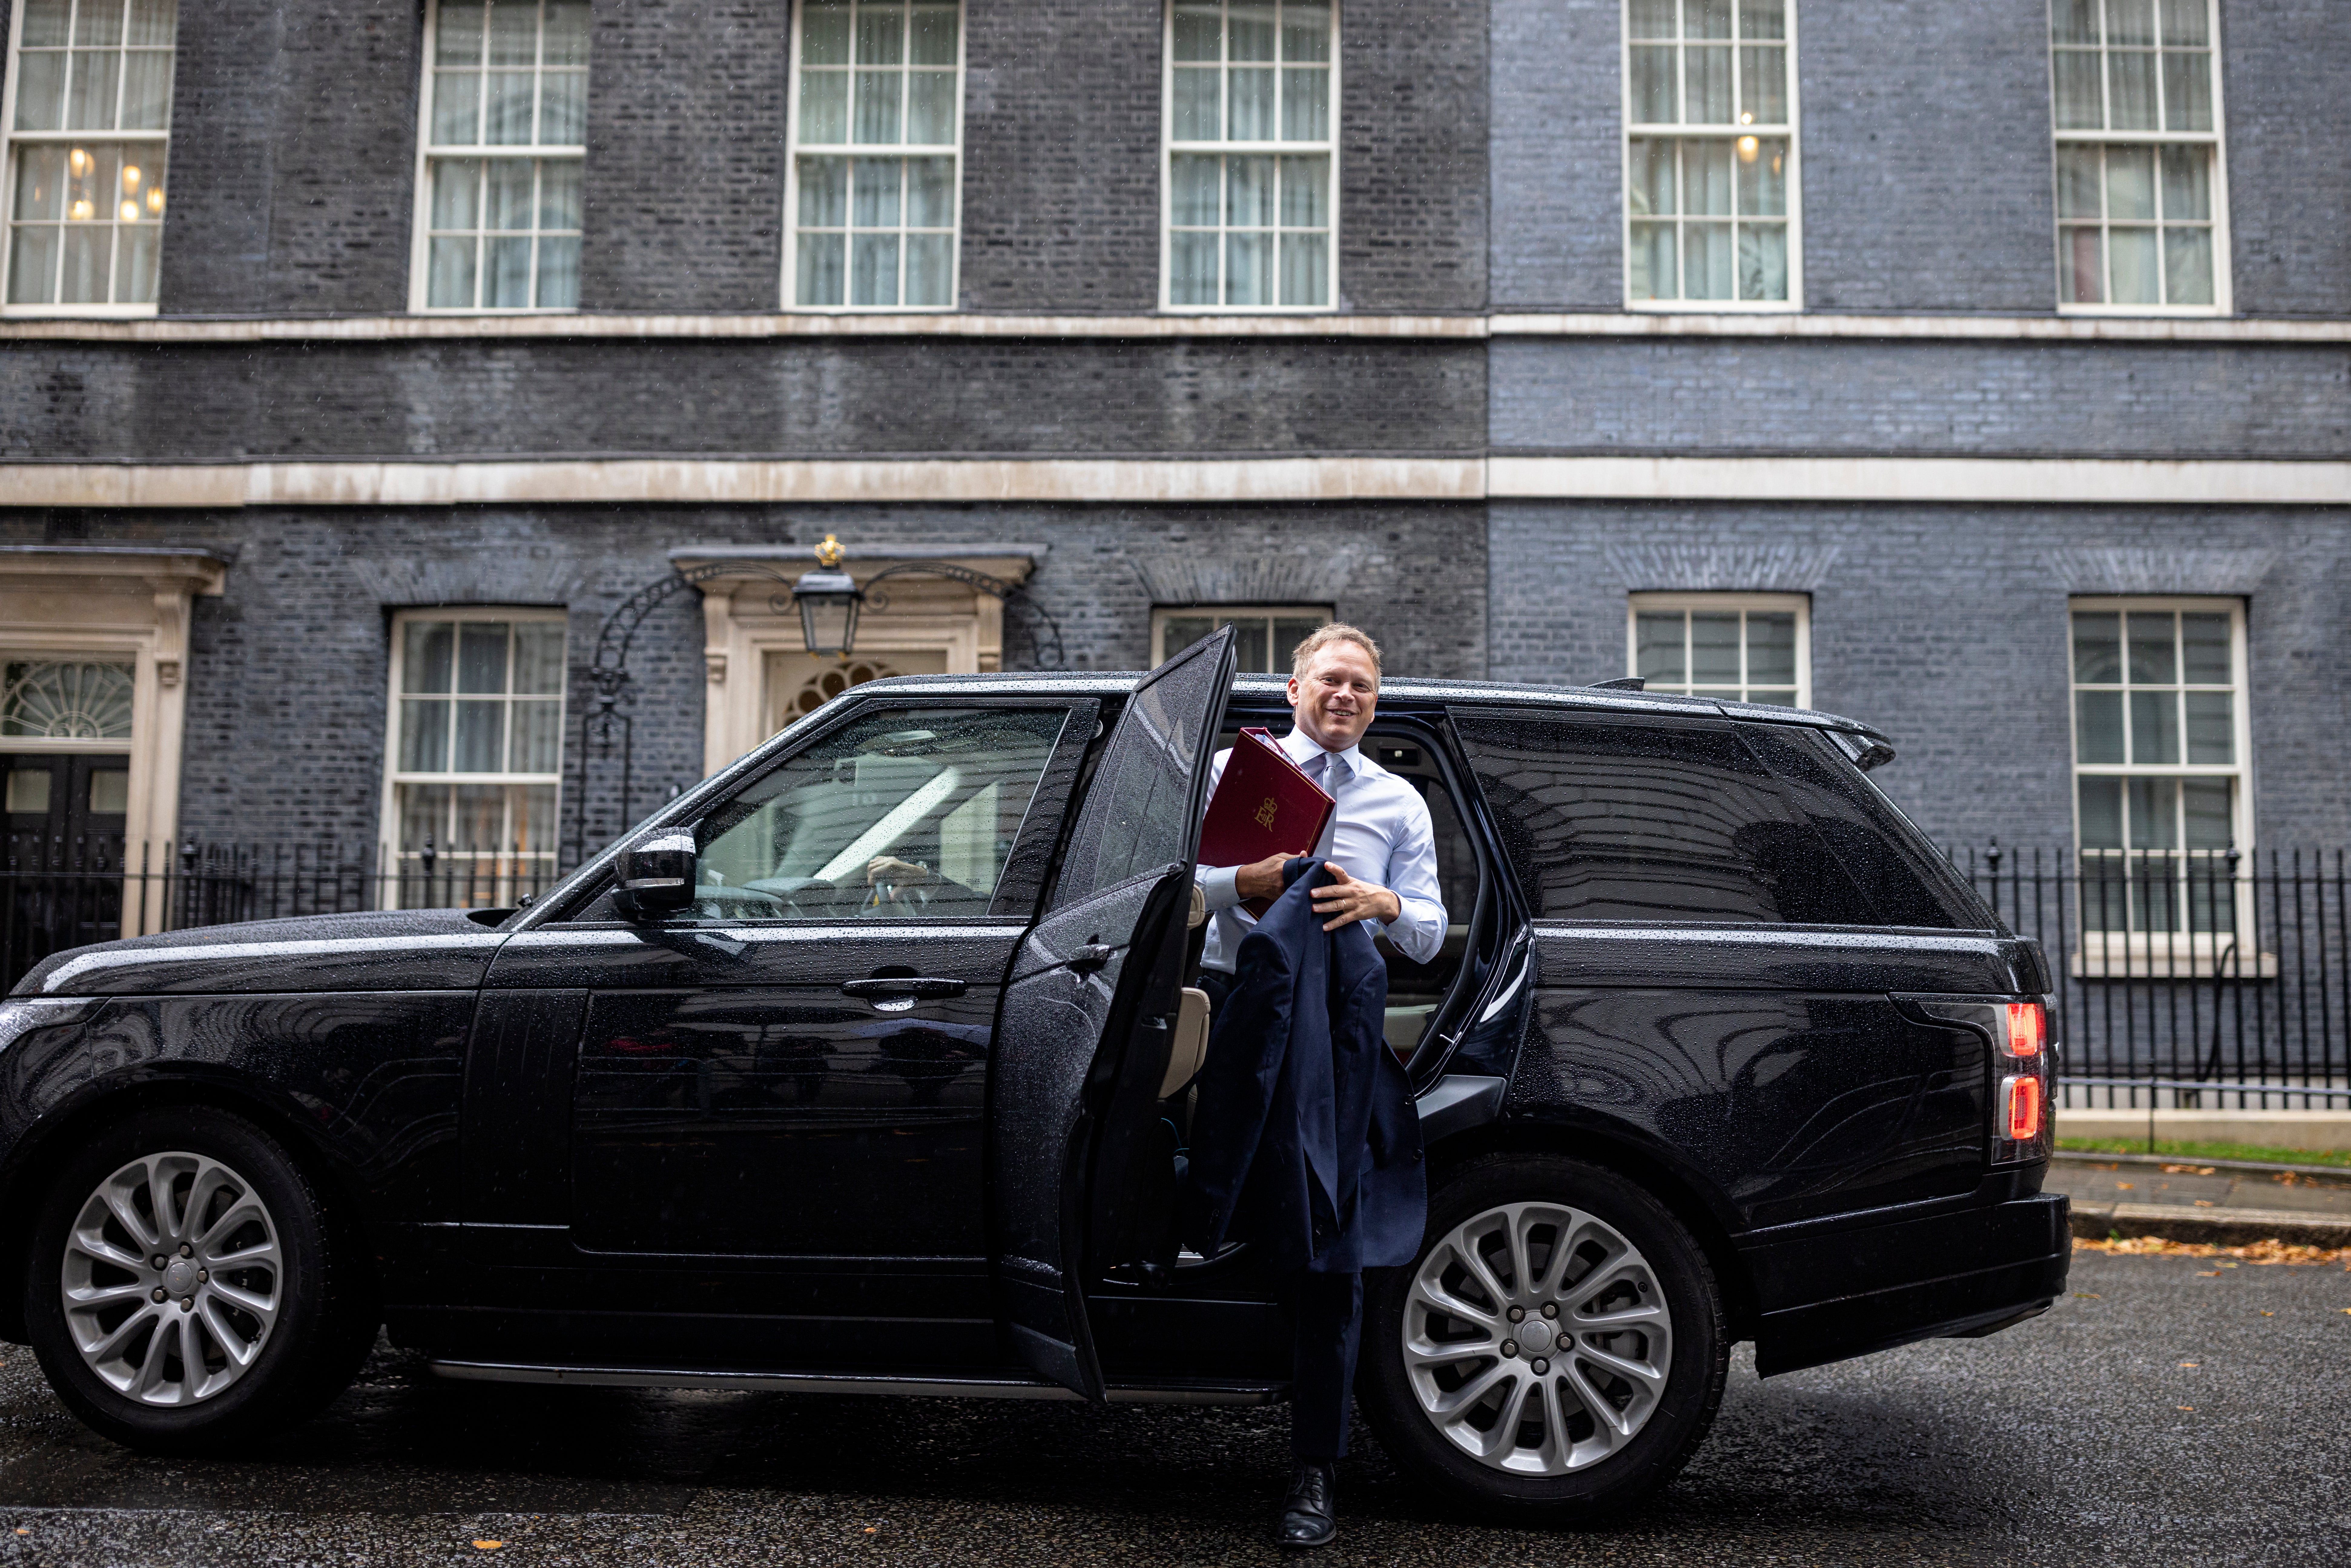 Transport secretary Grant Shapps arrives at Downing Street on 14 September